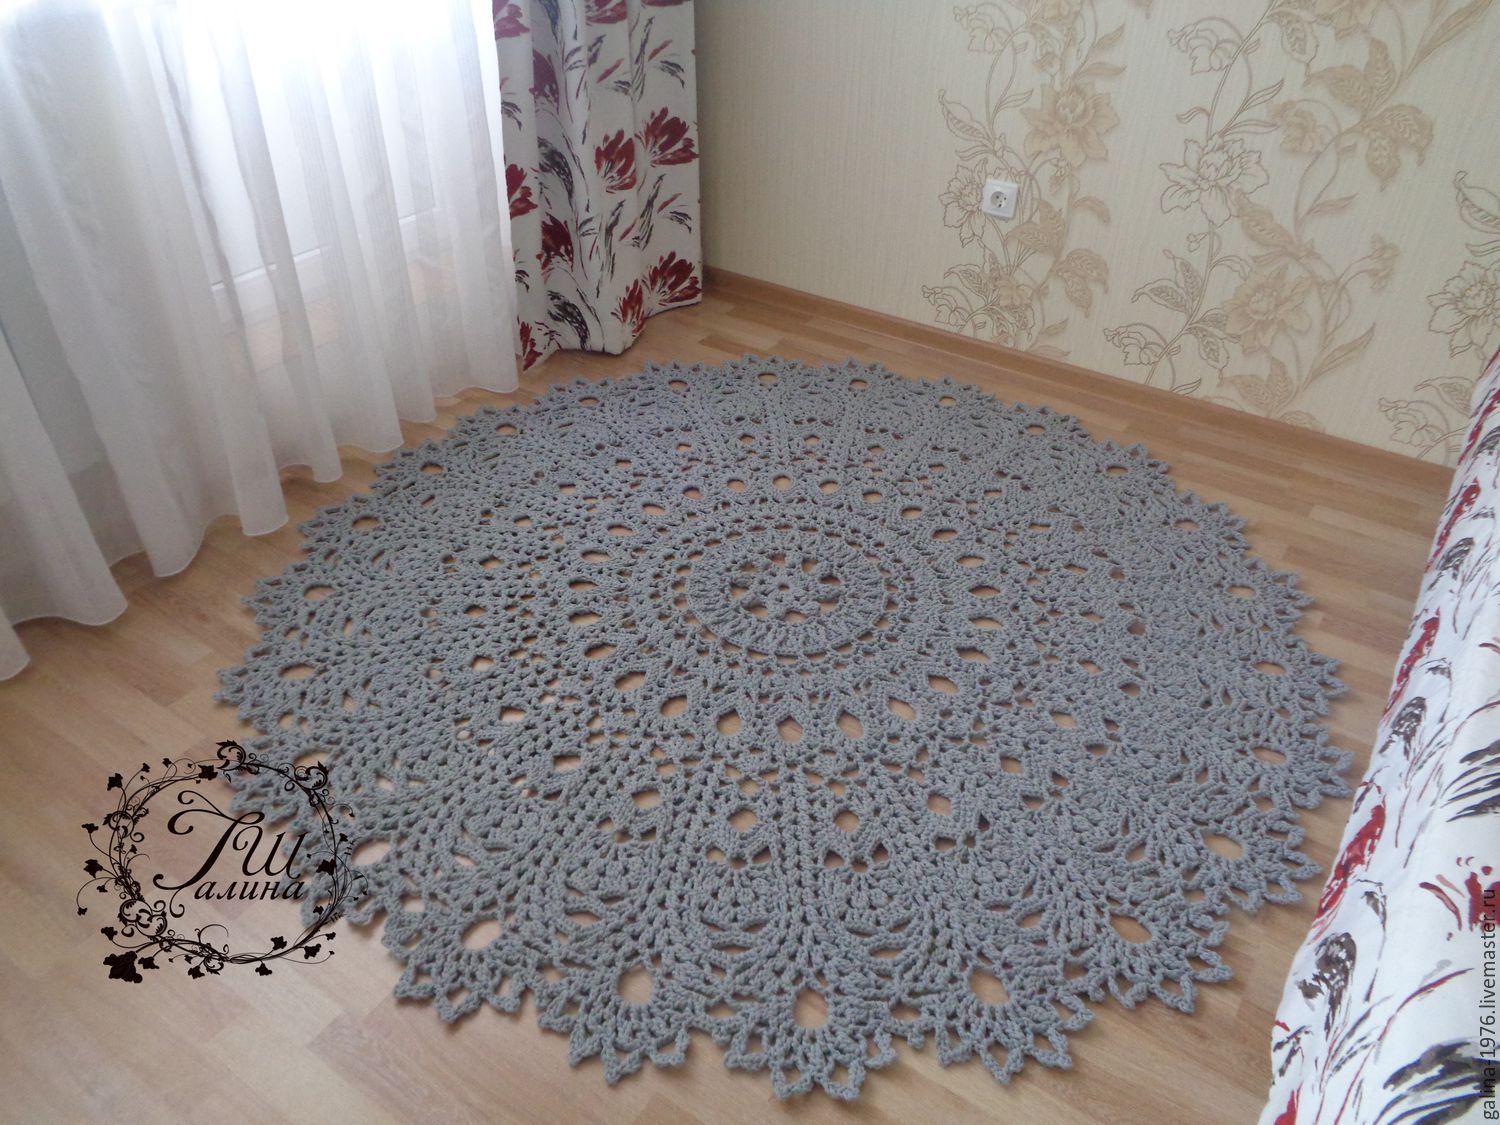 Cotton knitted carpet 'grace', Carpets, Voronezh,  Фото №1